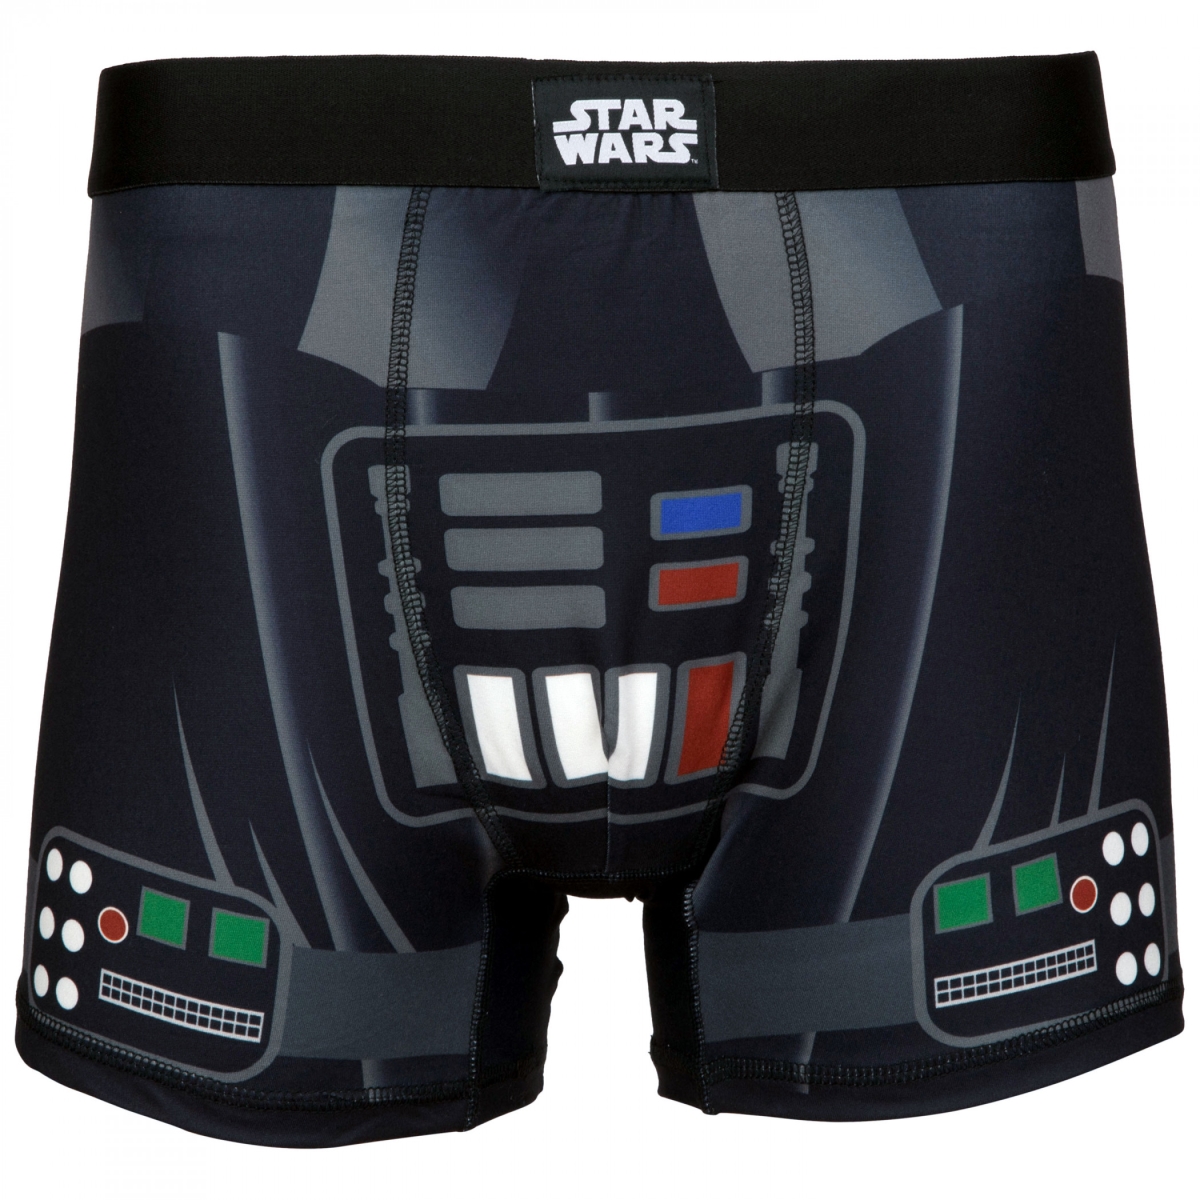 851928-ll-28-30  Darth Vader Cosplay Mens Underwear Boxer Briefs - Small - 28-30 -  Star Wars, 851928-ll(28-30)